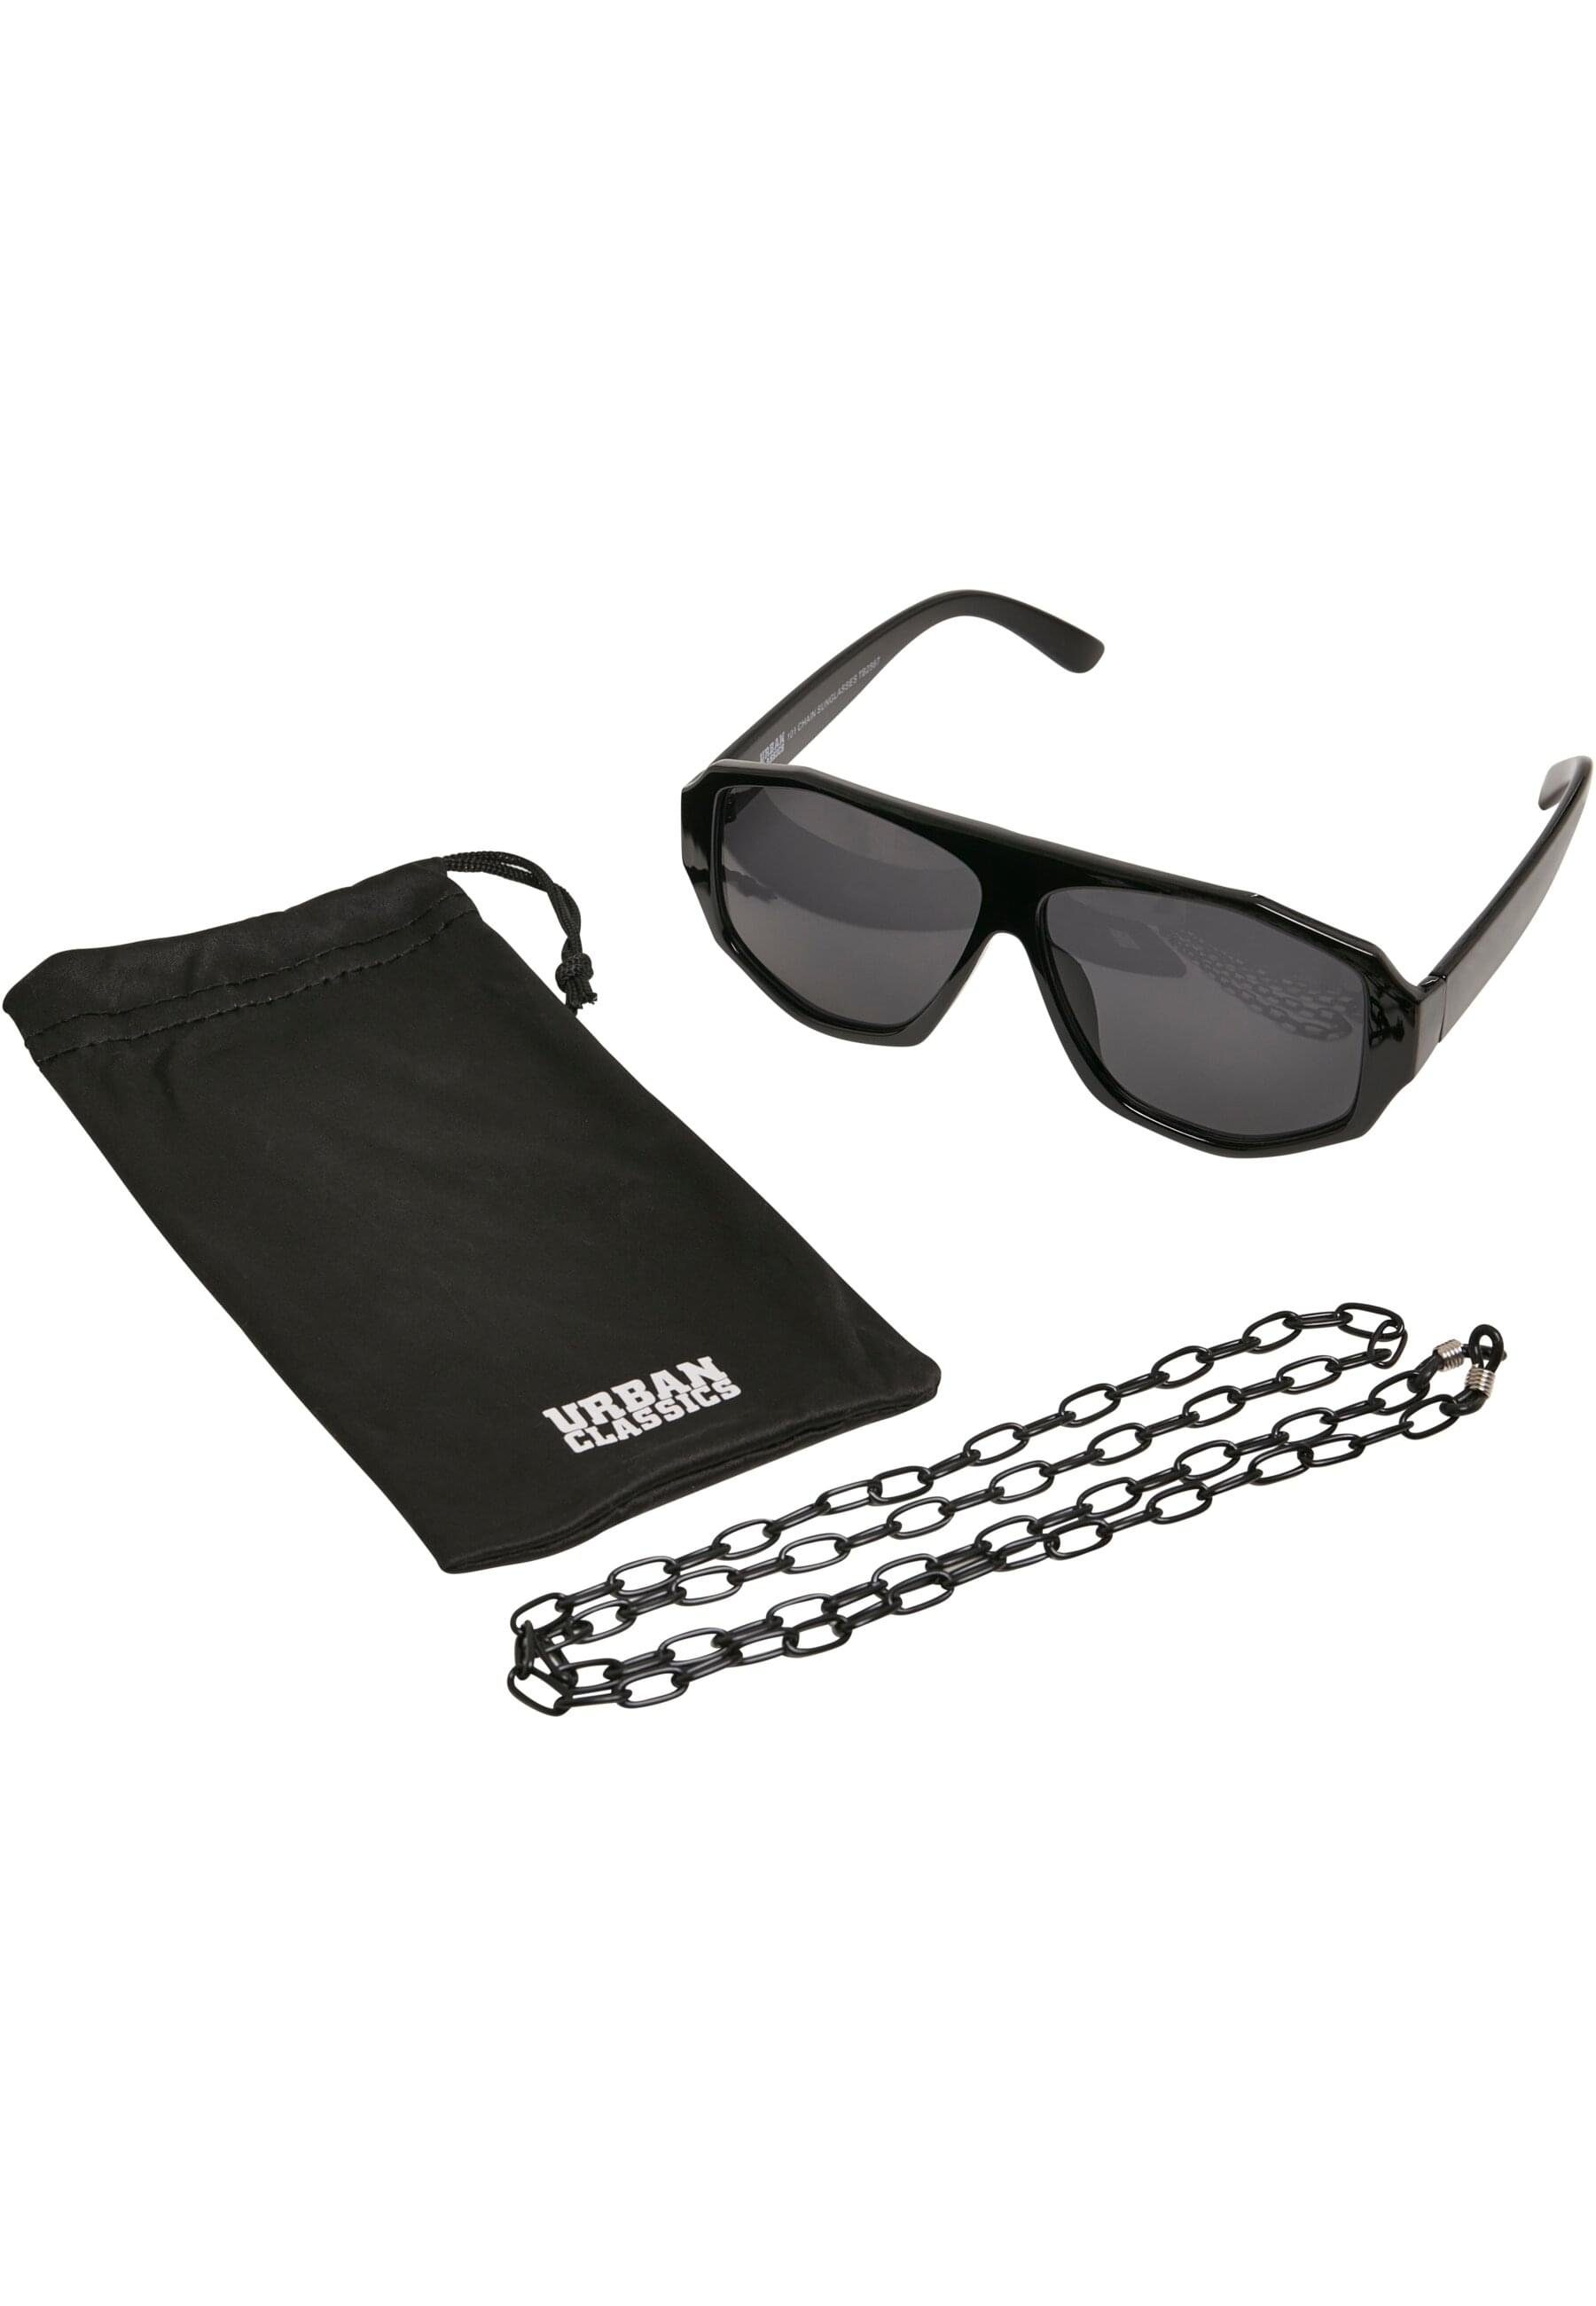 Sonnenbrille CLASSICS URBAN 101 Chain Chain Sunglasses Unisex black/black 101 TB2567